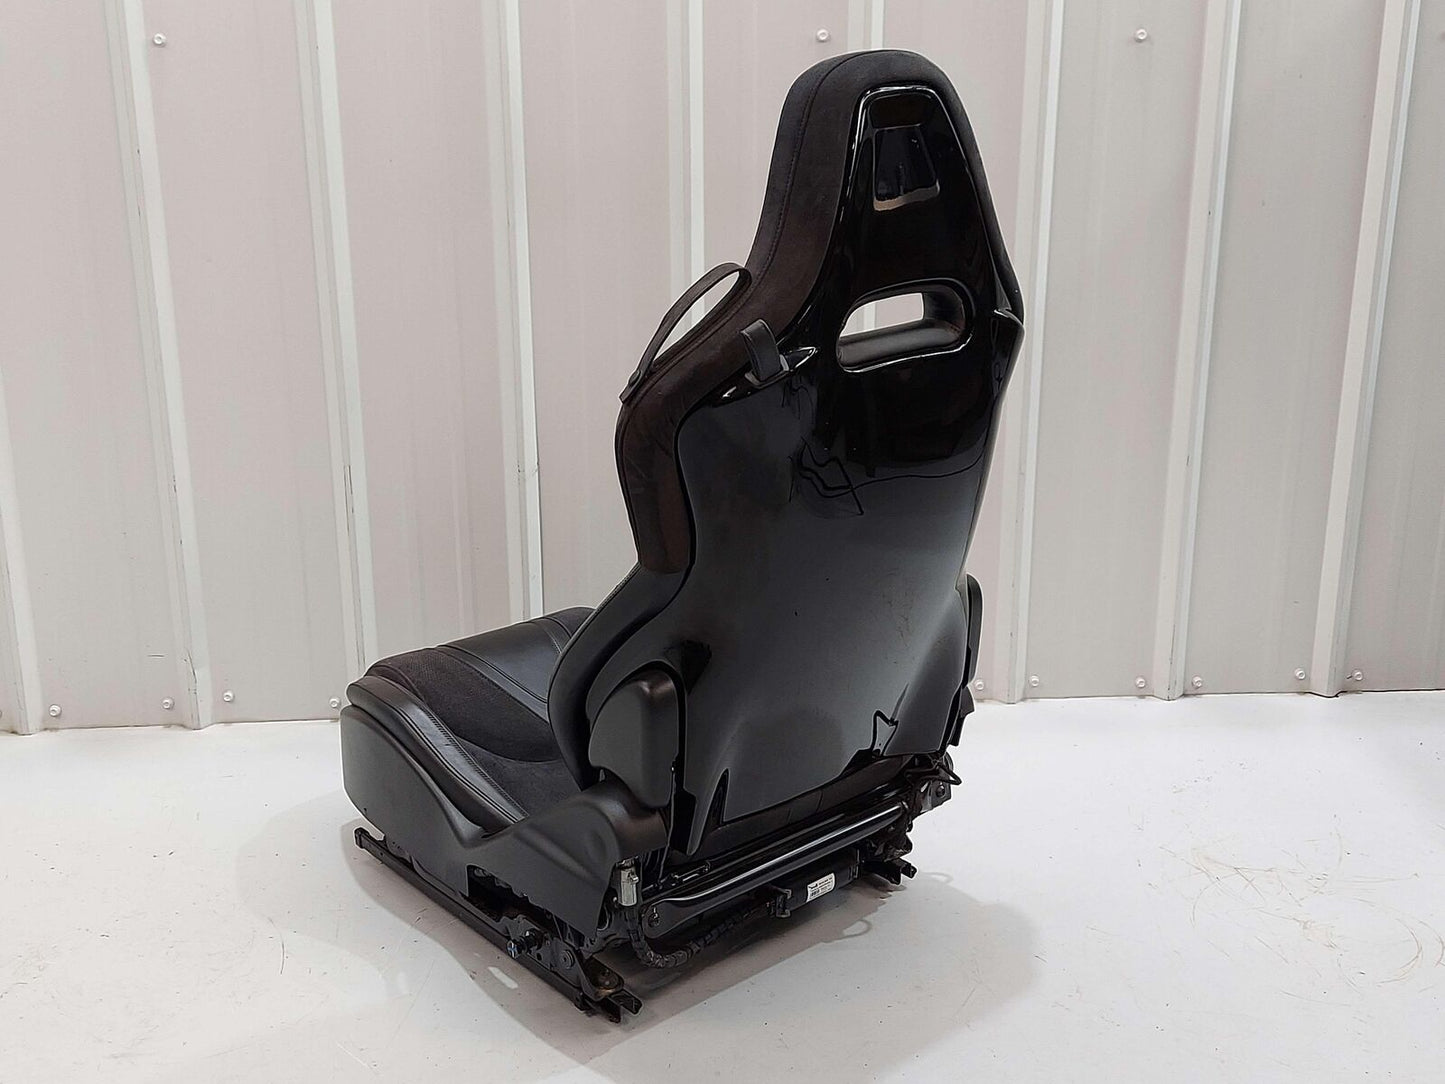 2020 Mclaren 720s Front LH Left Seat Power Black Leather/Suede 2K KMS *Notes*